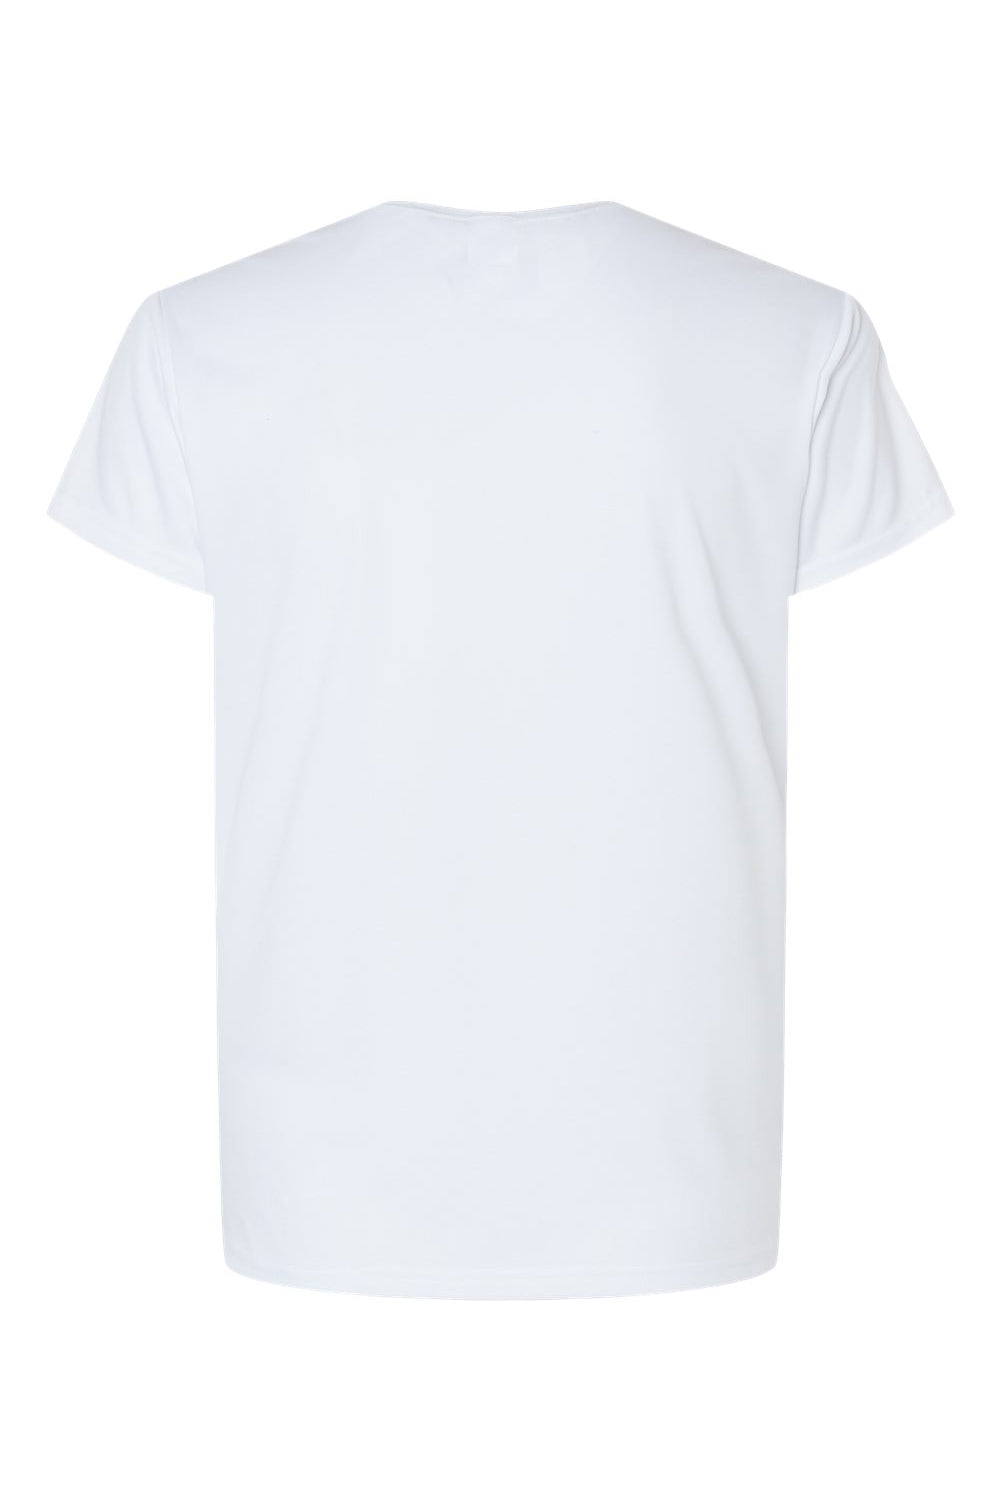 C2 Sport 5600 Womens Performance Moisture Wicking Short Sleeve Crewneck T-Shirt White Flat Back